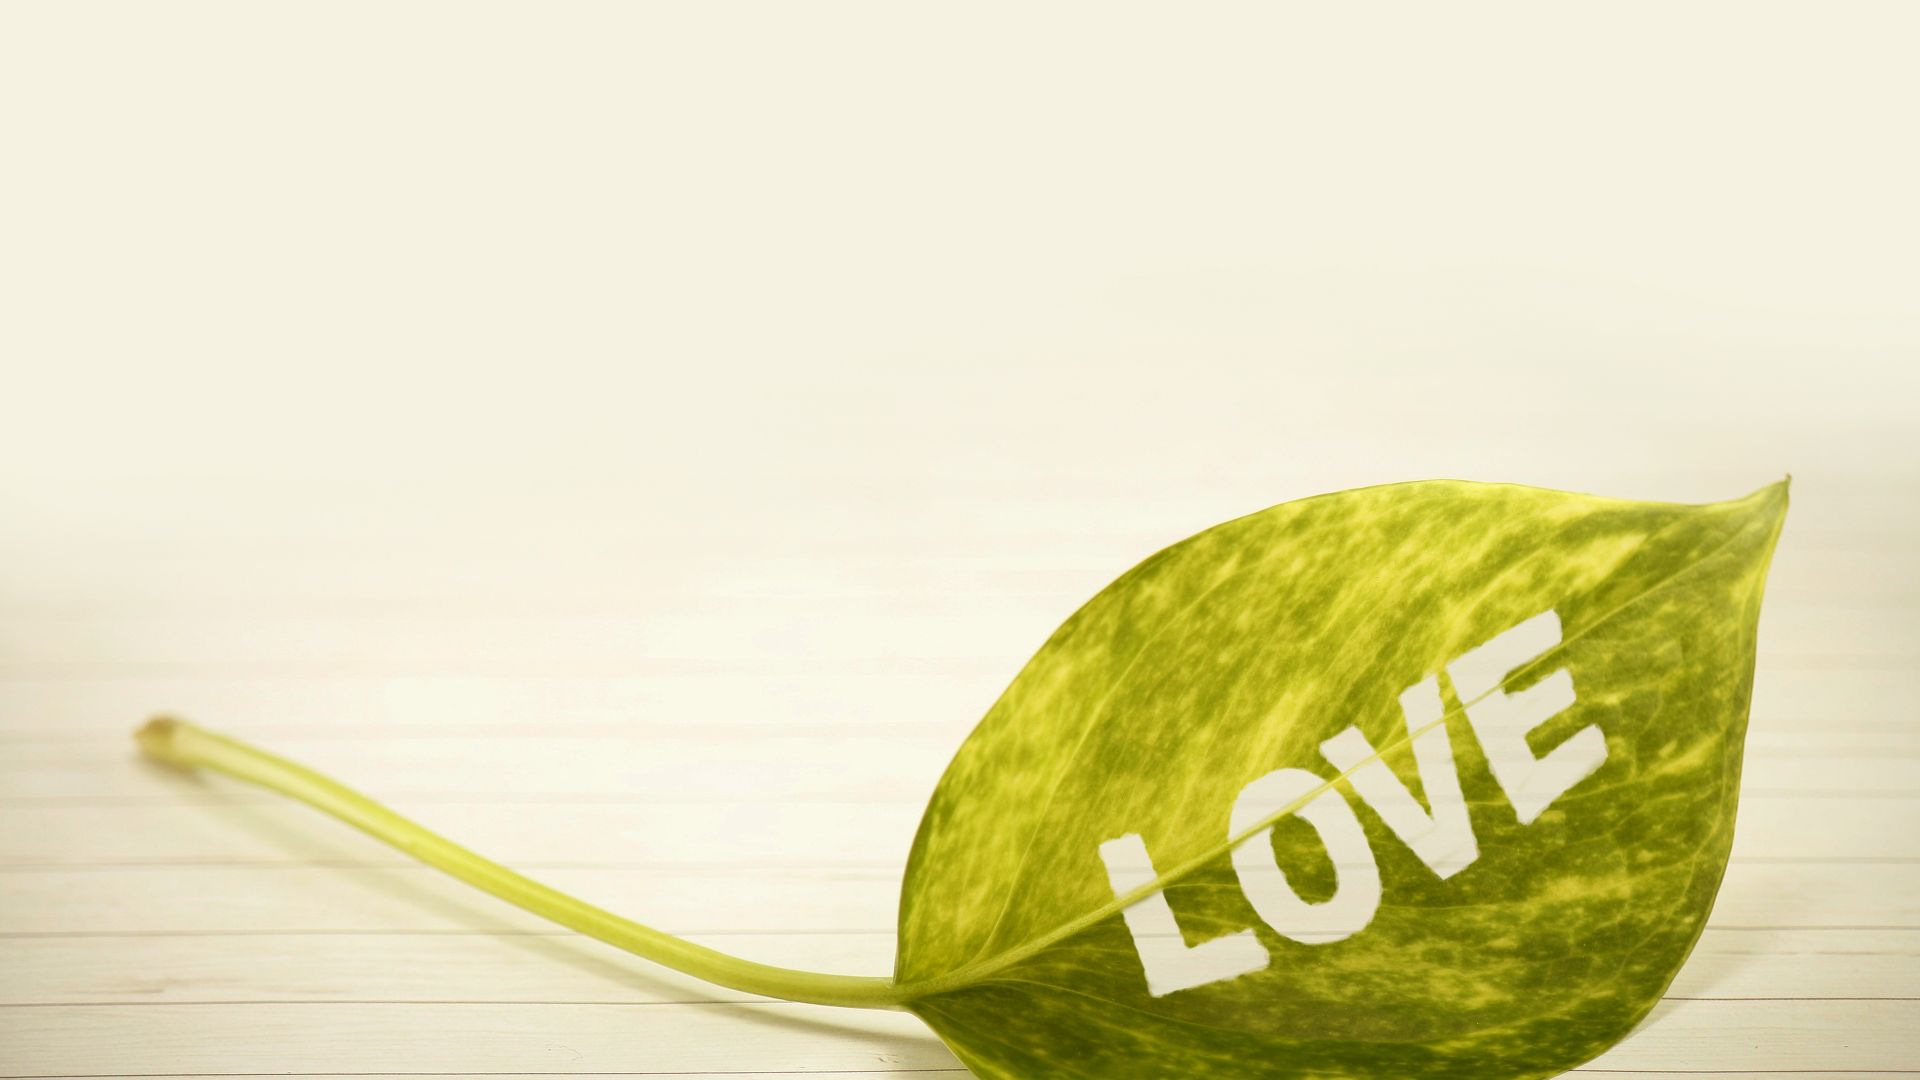 фото любовь, love image, leaf, 4k (horizontal)